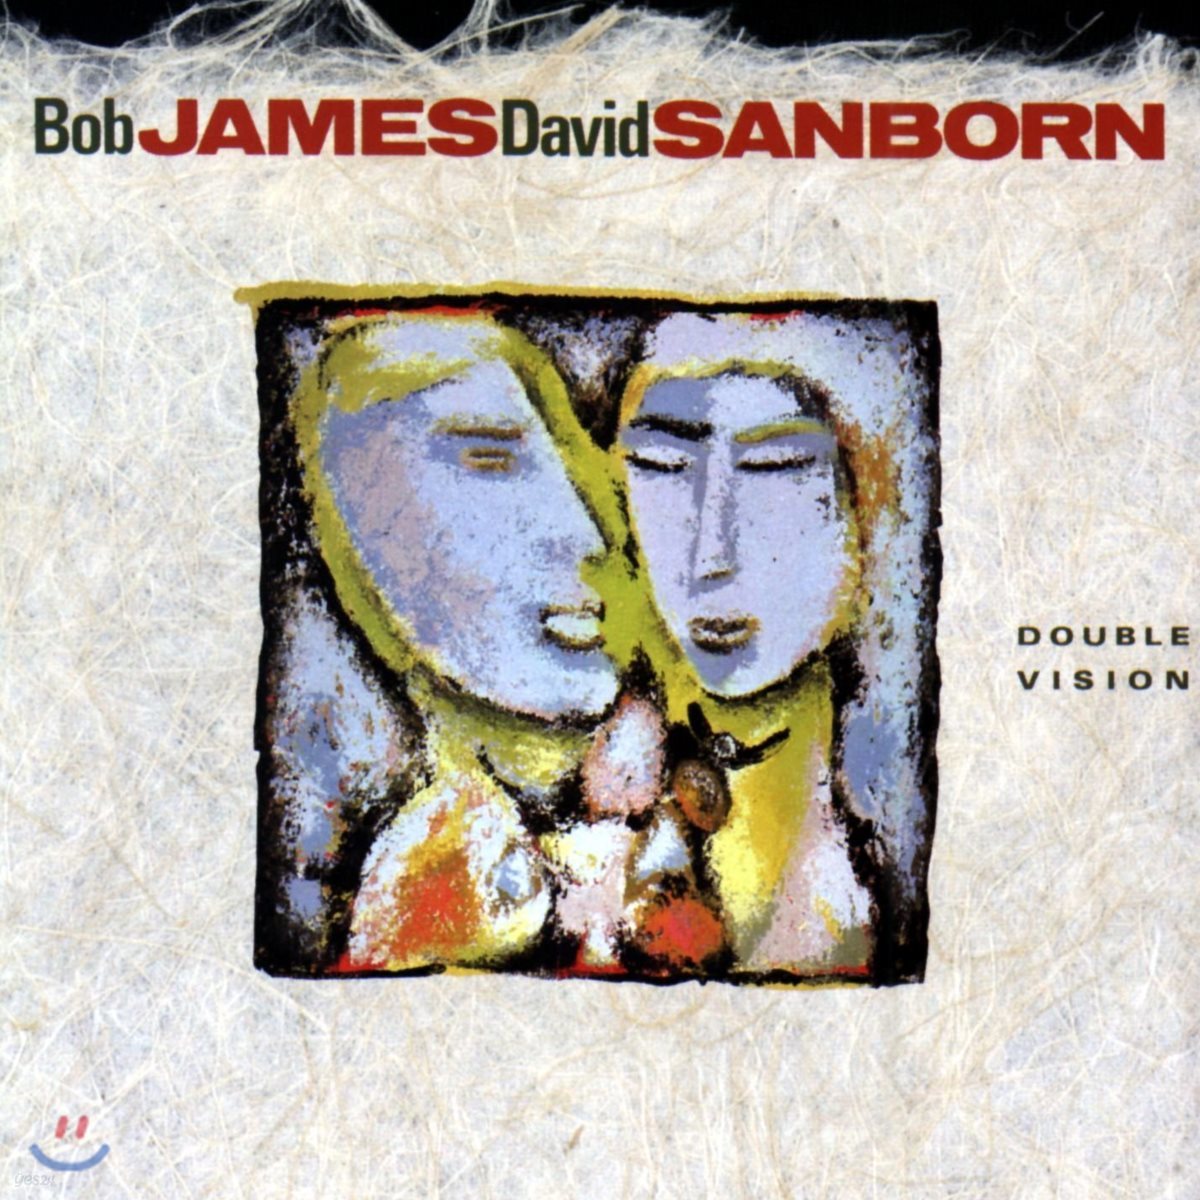 Bob James / David Sanborn - Double Vision 밥 제임스, 데이빗 샌본 